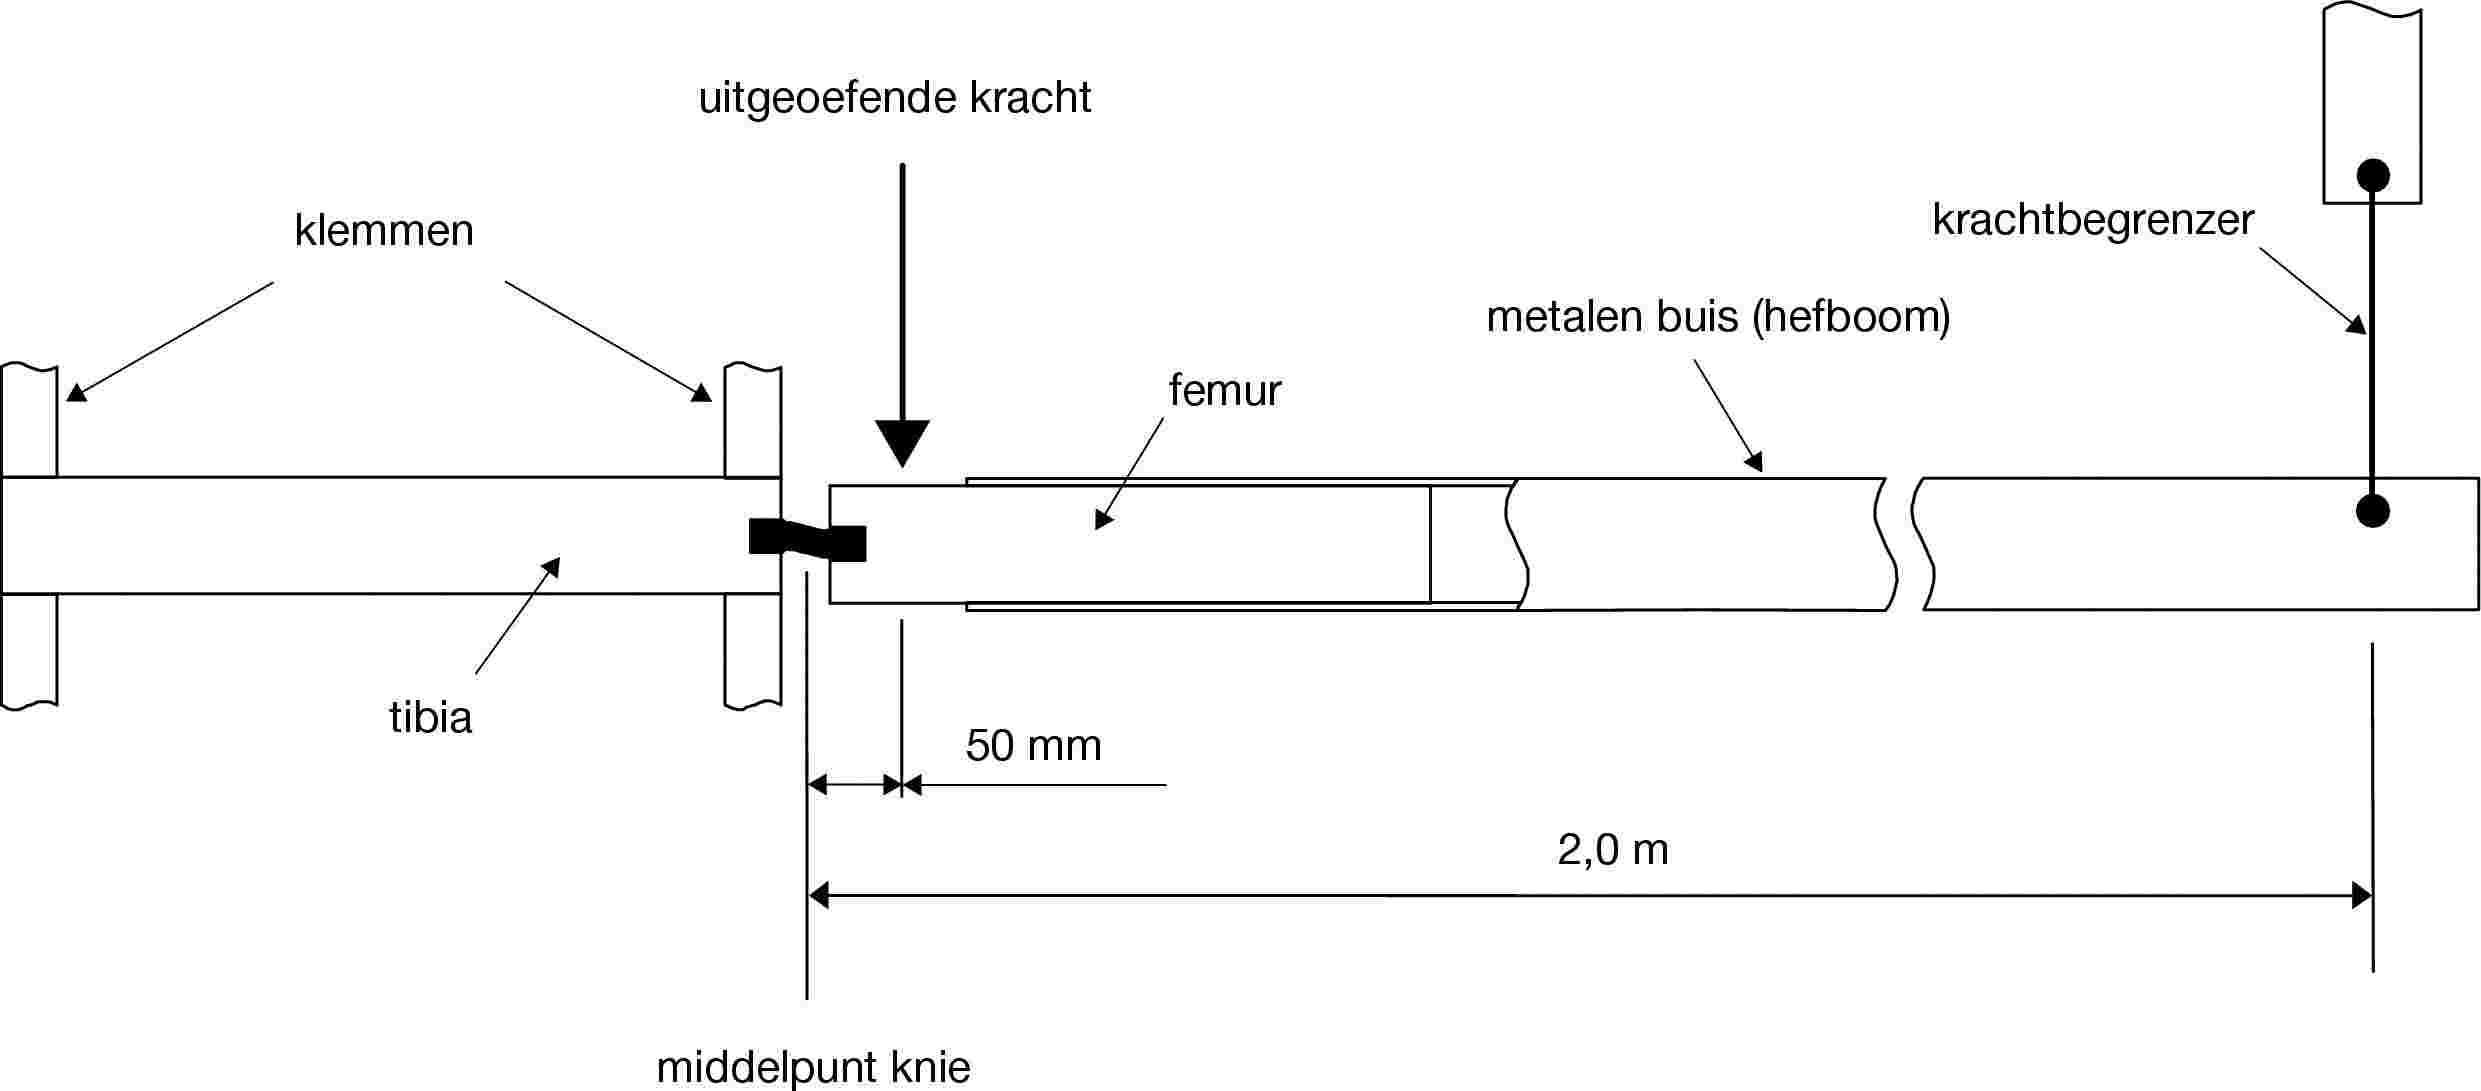 uitgeoefende krachtklemmenkrachtbegrenzermetalen buis (hefboom)femurtibia50 mm2,0 mmiddelpunt knie